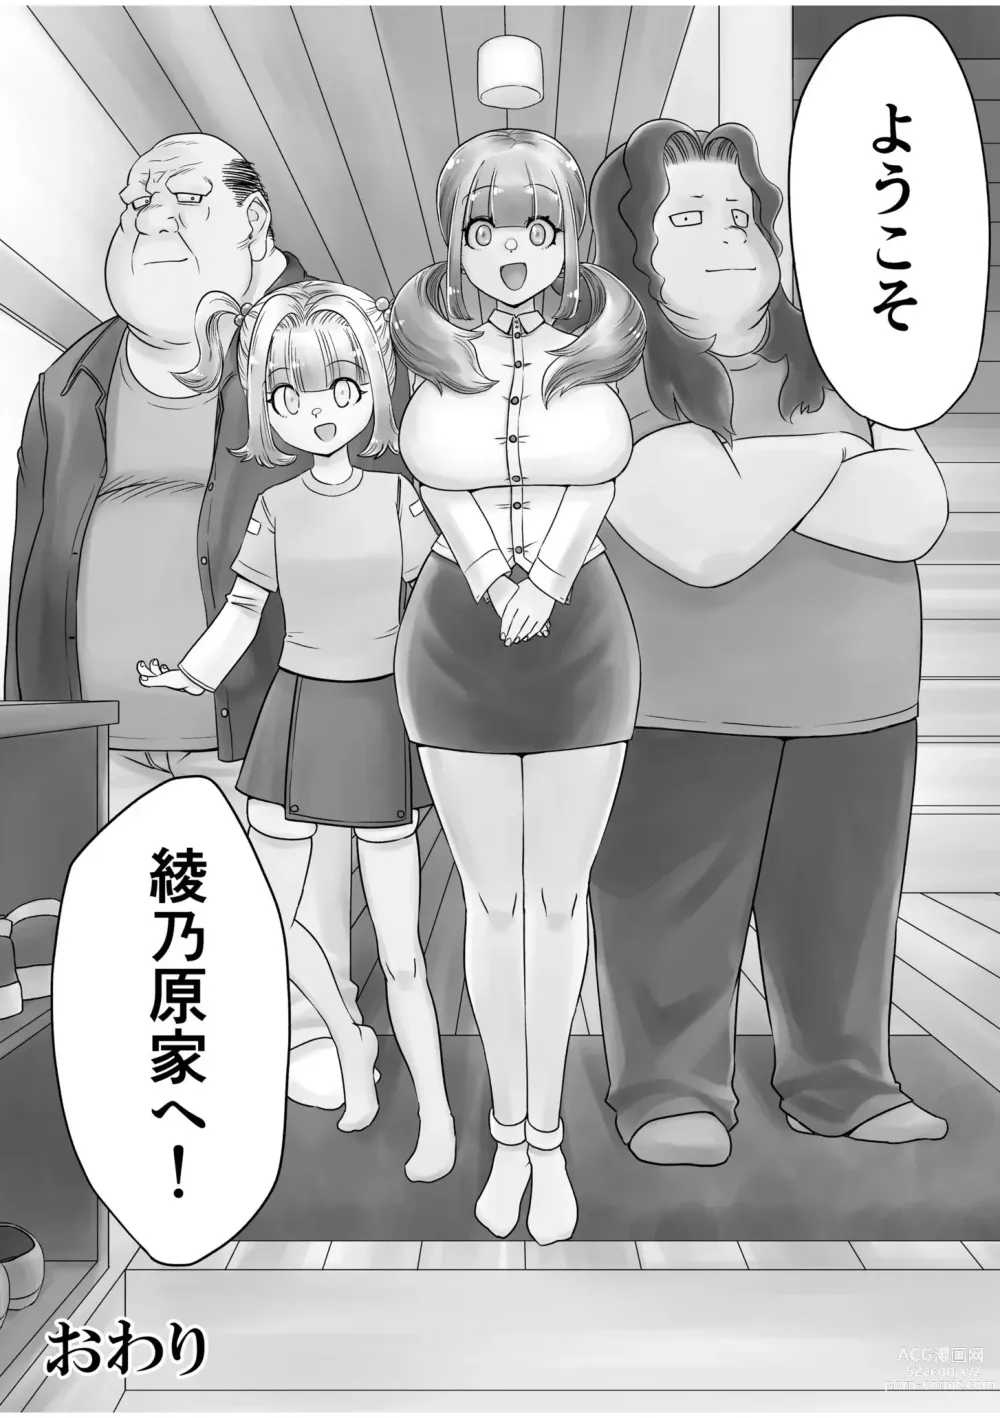 Page 160 of manga Shimai no Kyousei - sisters loud voice